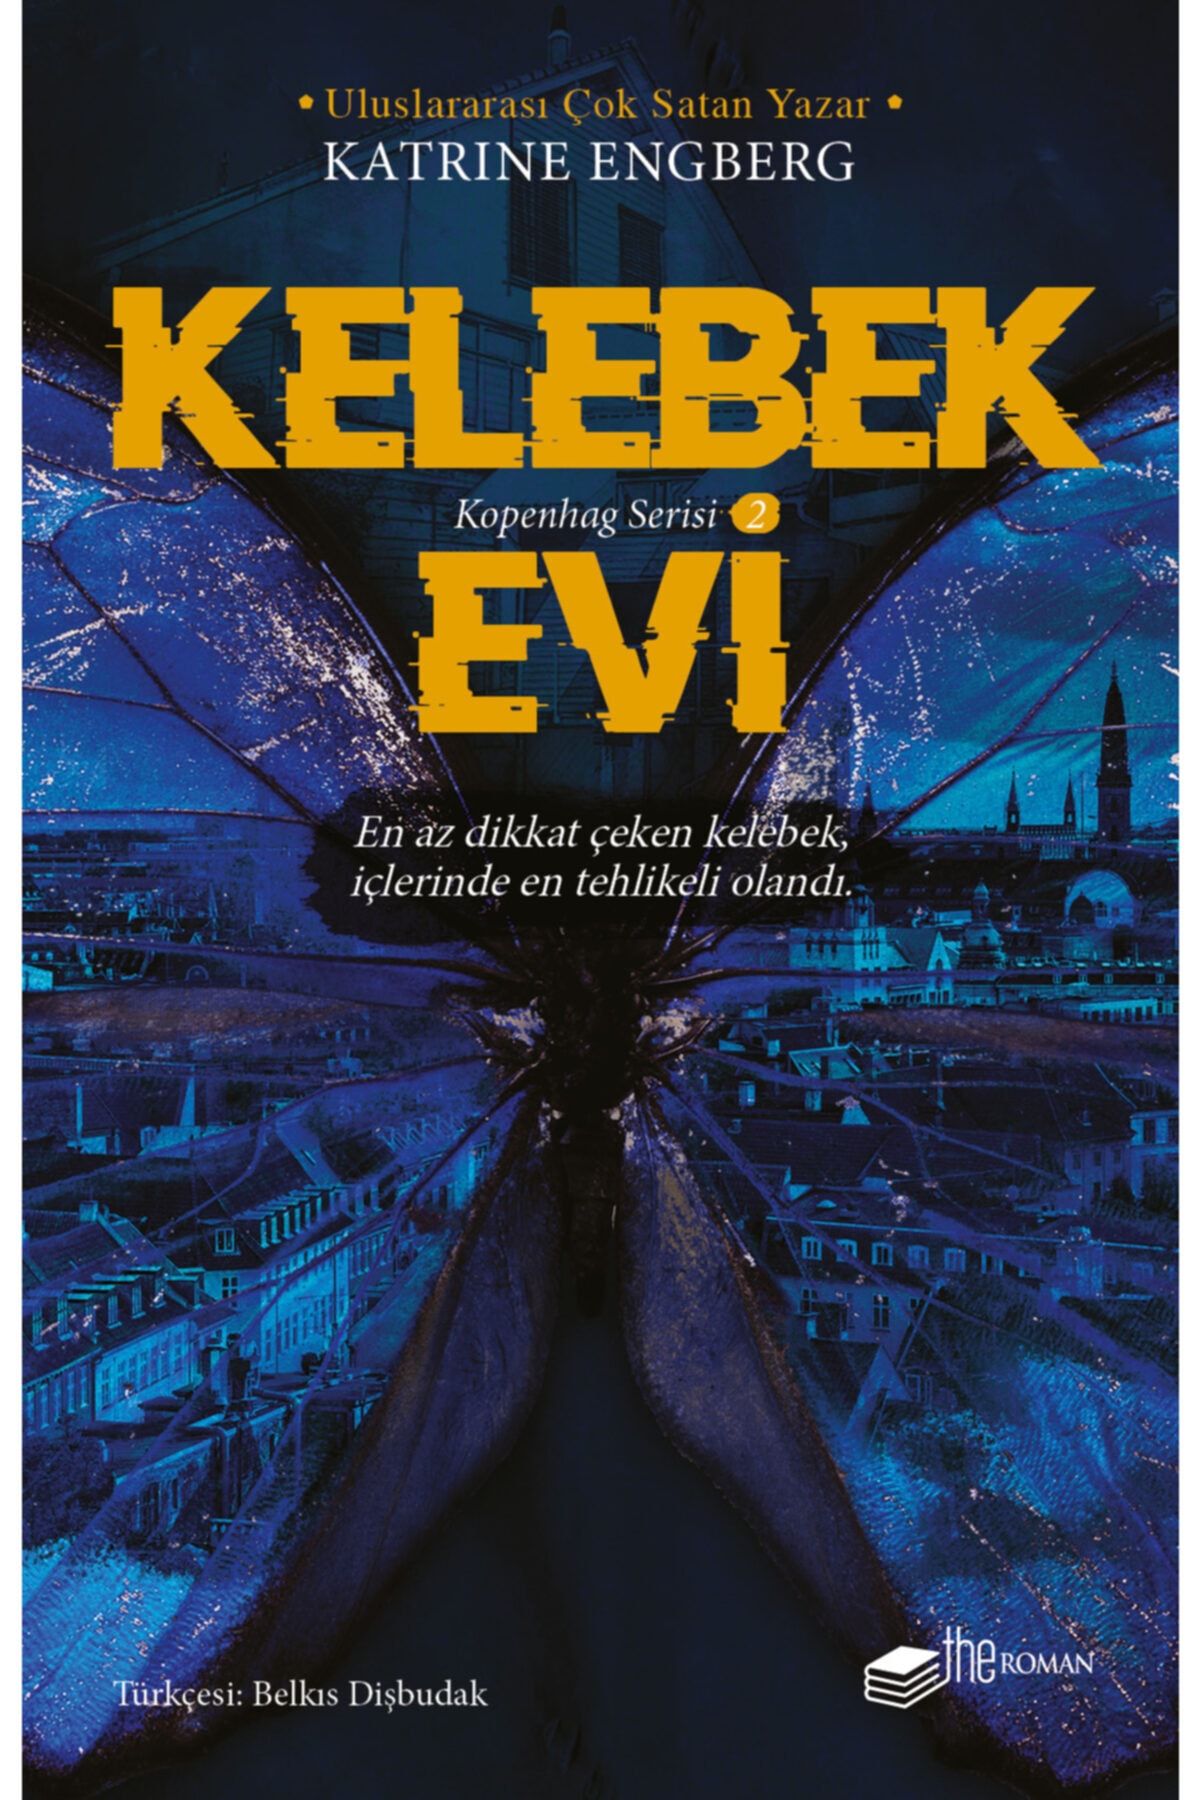 The Roman Kelebek Evi